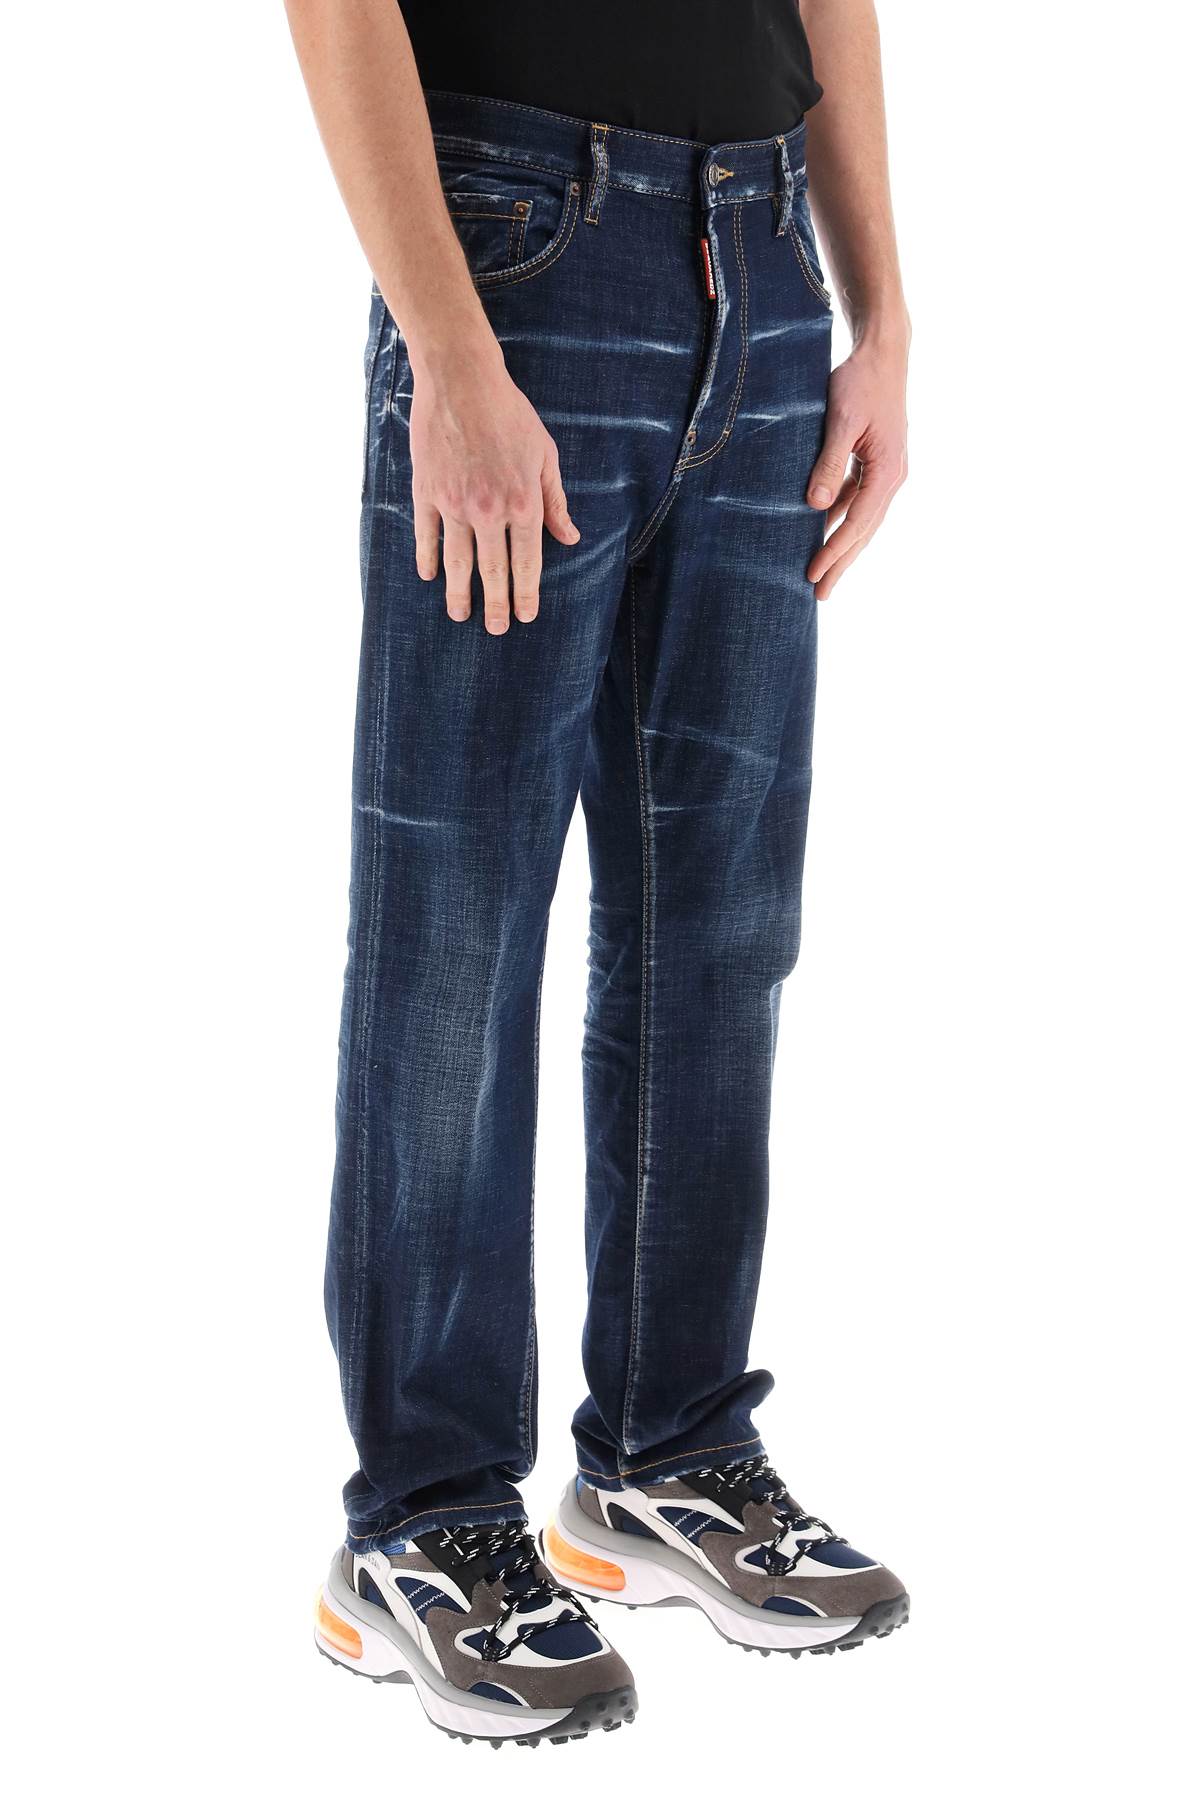 Dsquared2 642 jeans in dark clean wash-1